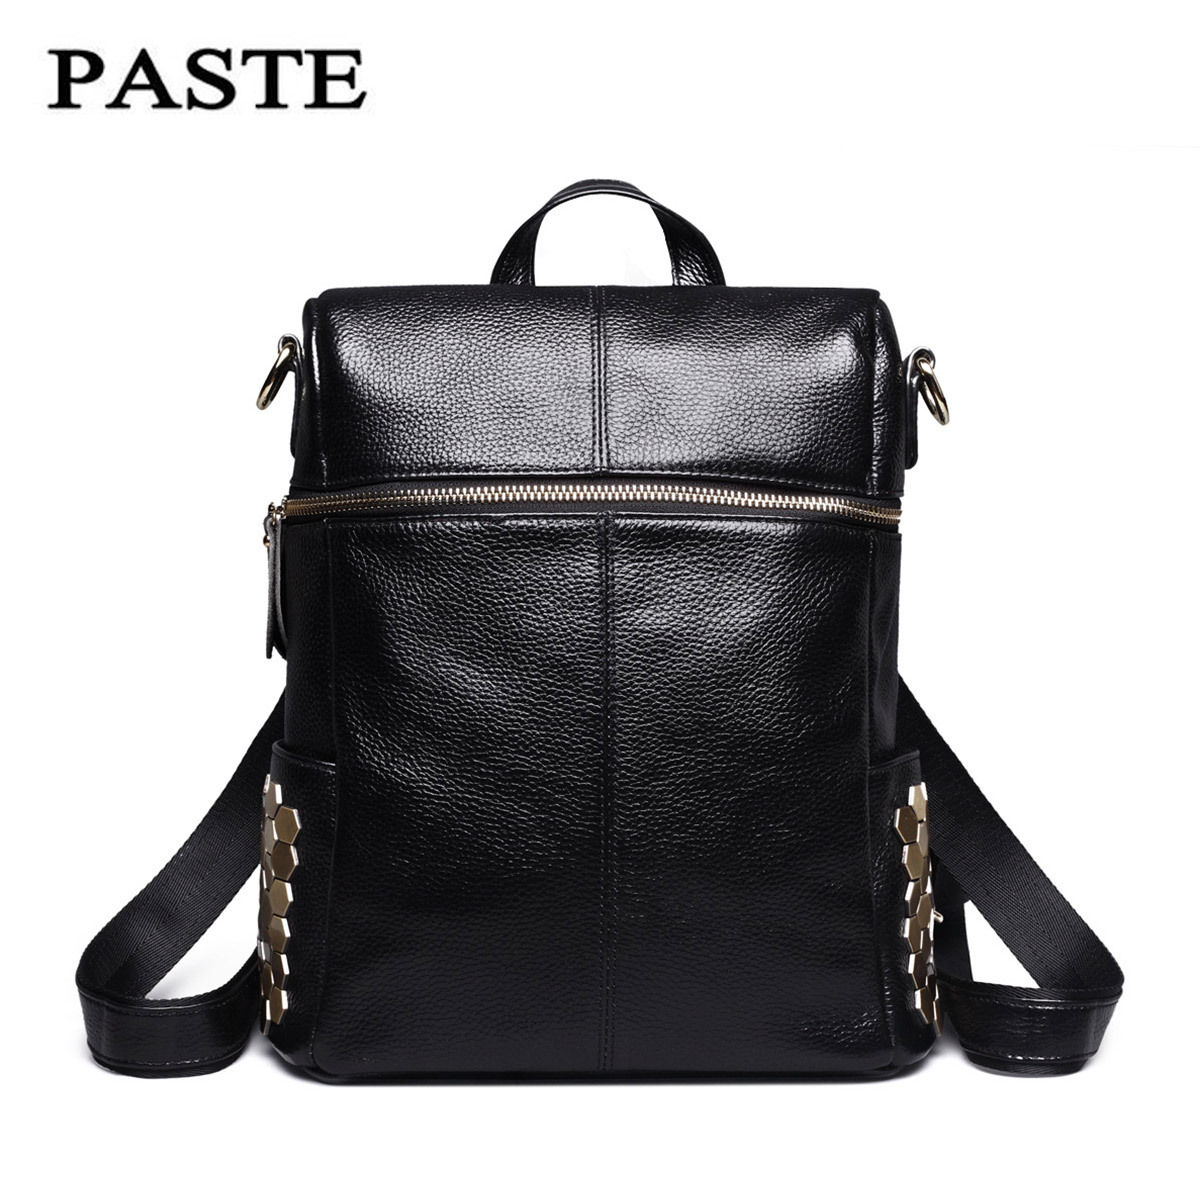 Фотография 2016 New Paste Women Genuine Leather frist layer cowskin Backpack Cowskin Bags black 6P0685